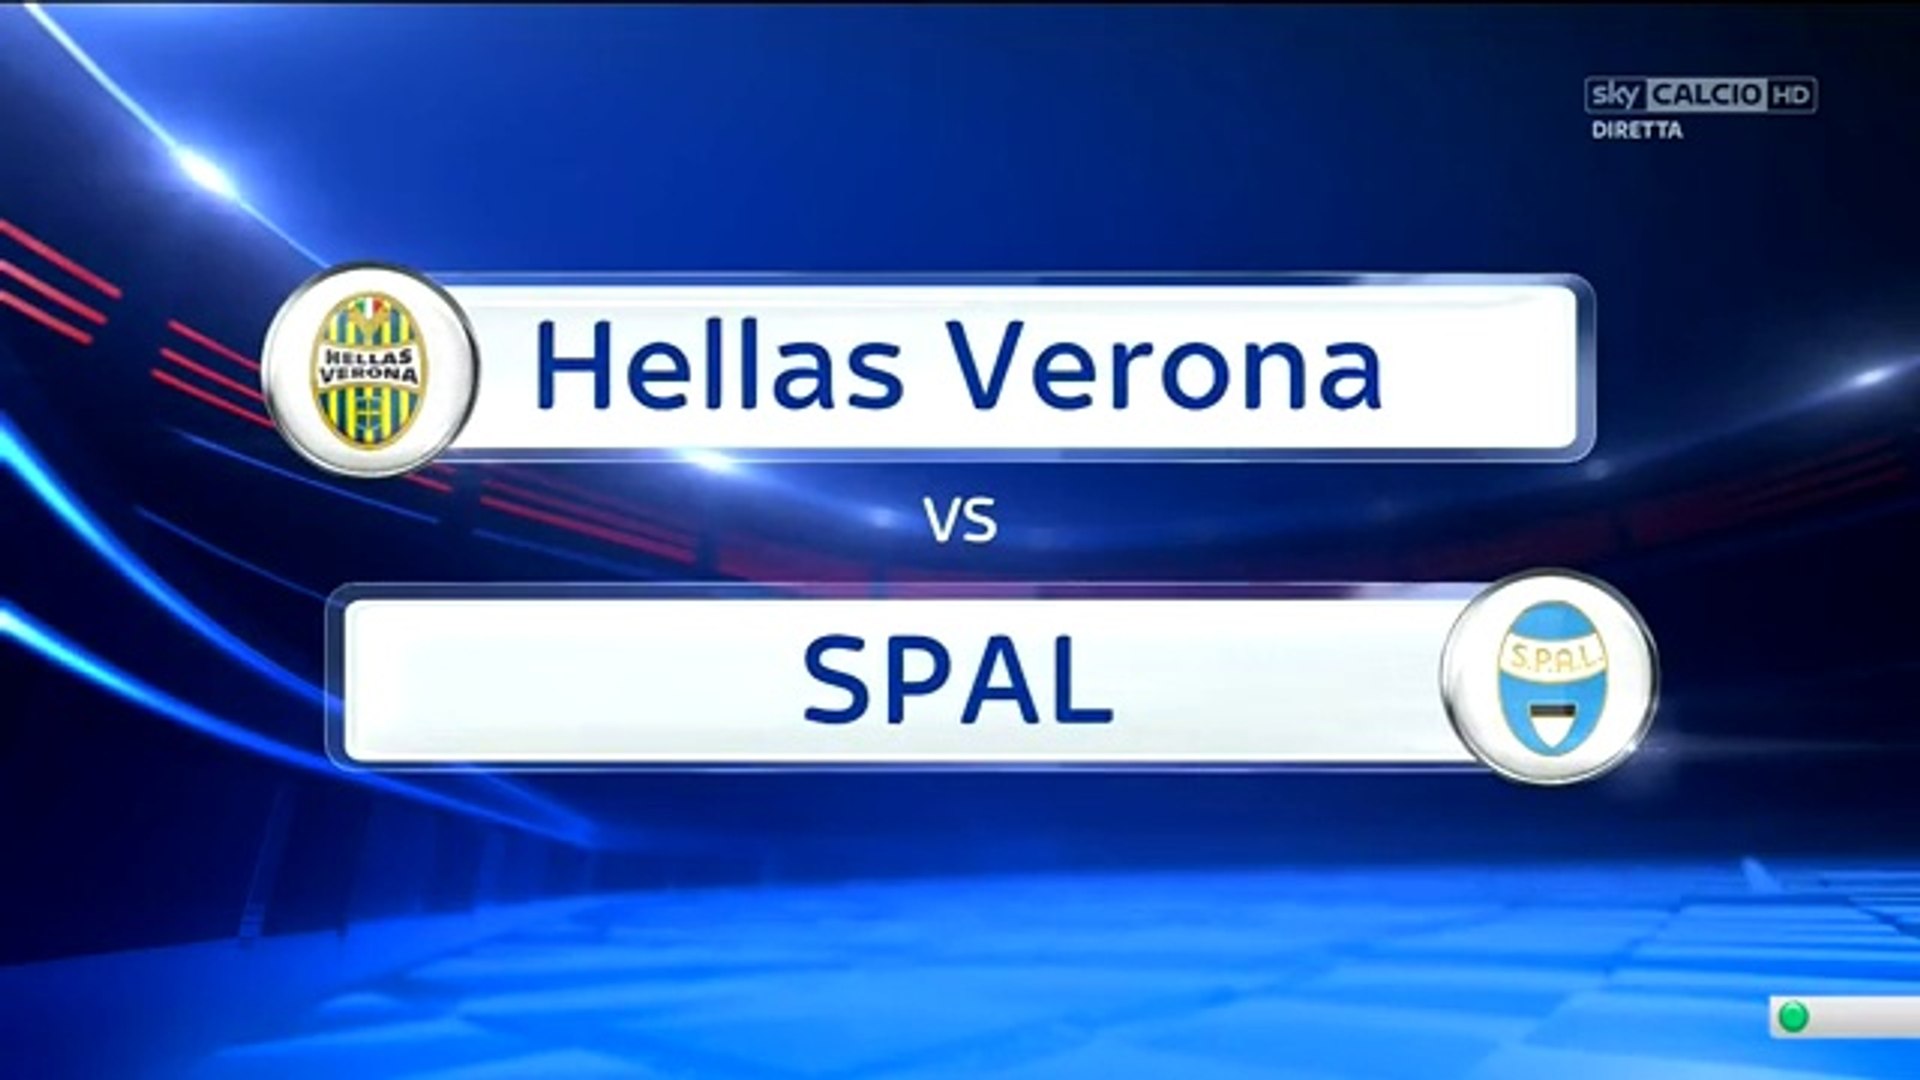 Hellas Verona vs SPAL 1 - 3 Highlights 29.04.2018 HD - video Dailymotion